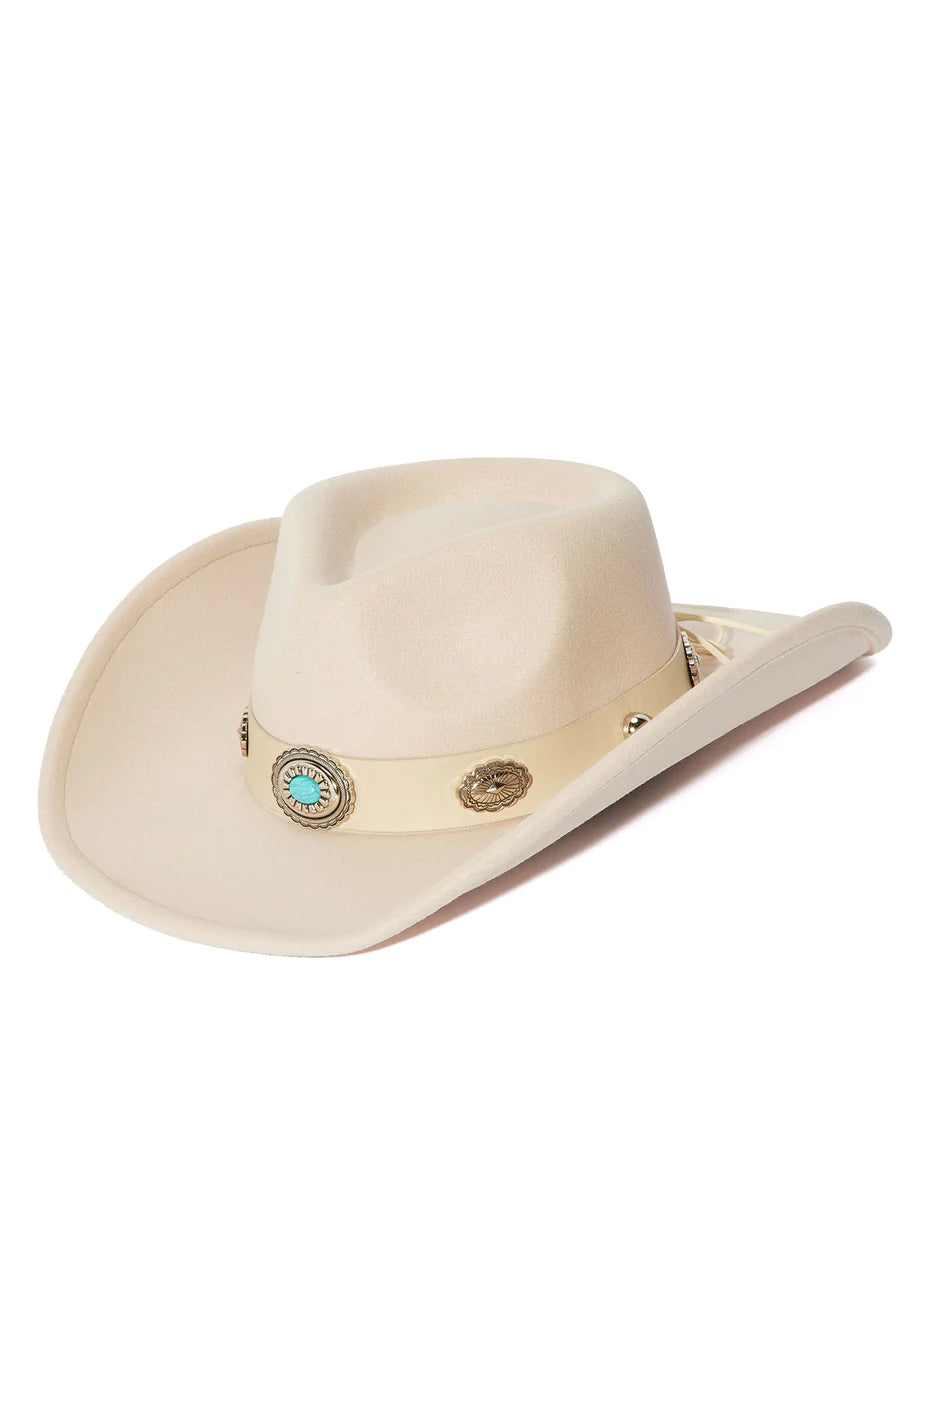 Fashionnova Desert Adventures Cowboy Hat